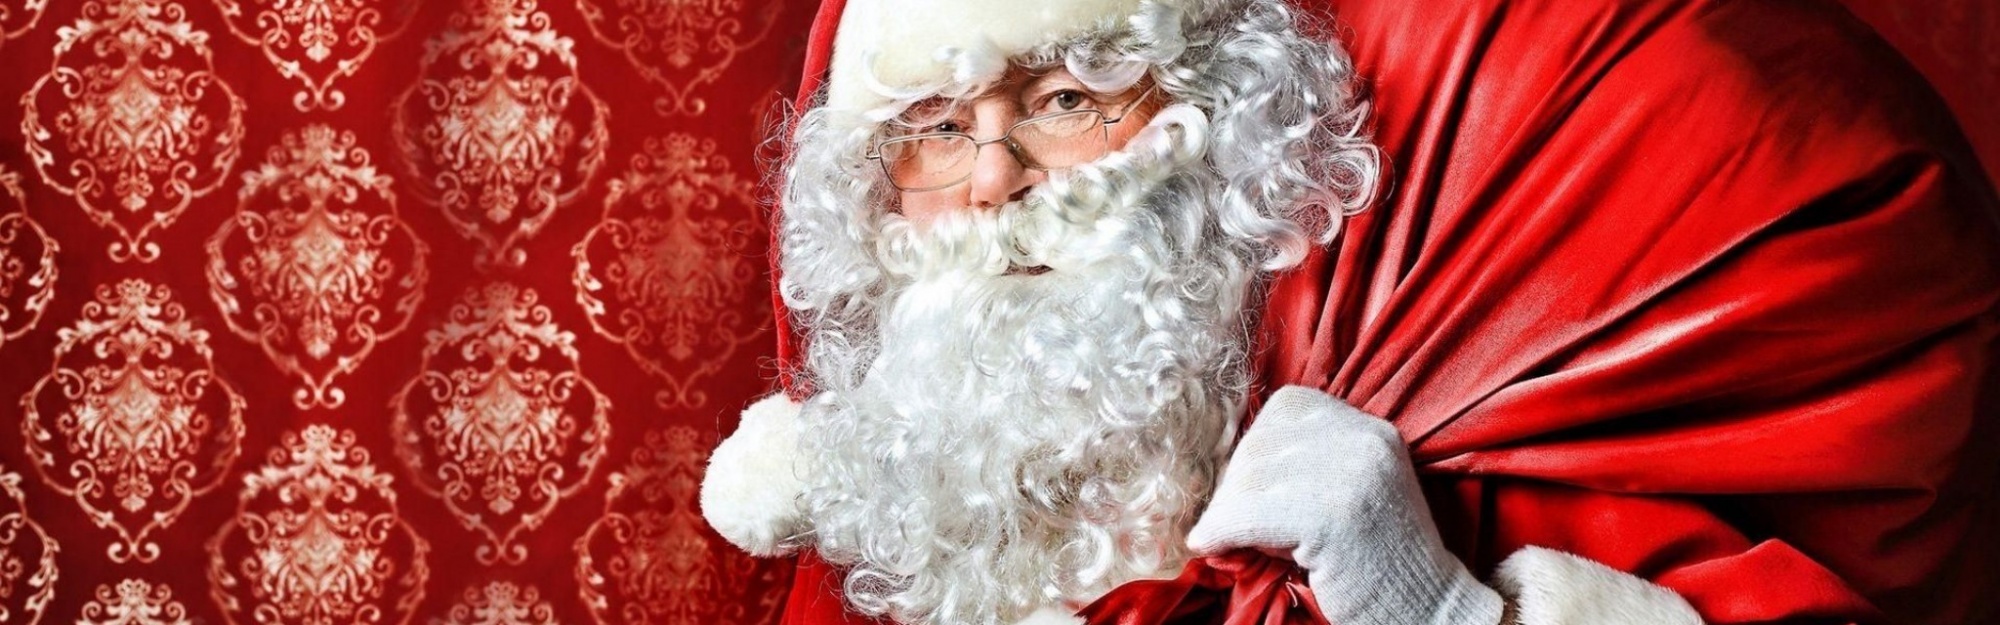 Santa Claus Bag Christmas Gifts Glasses Beard